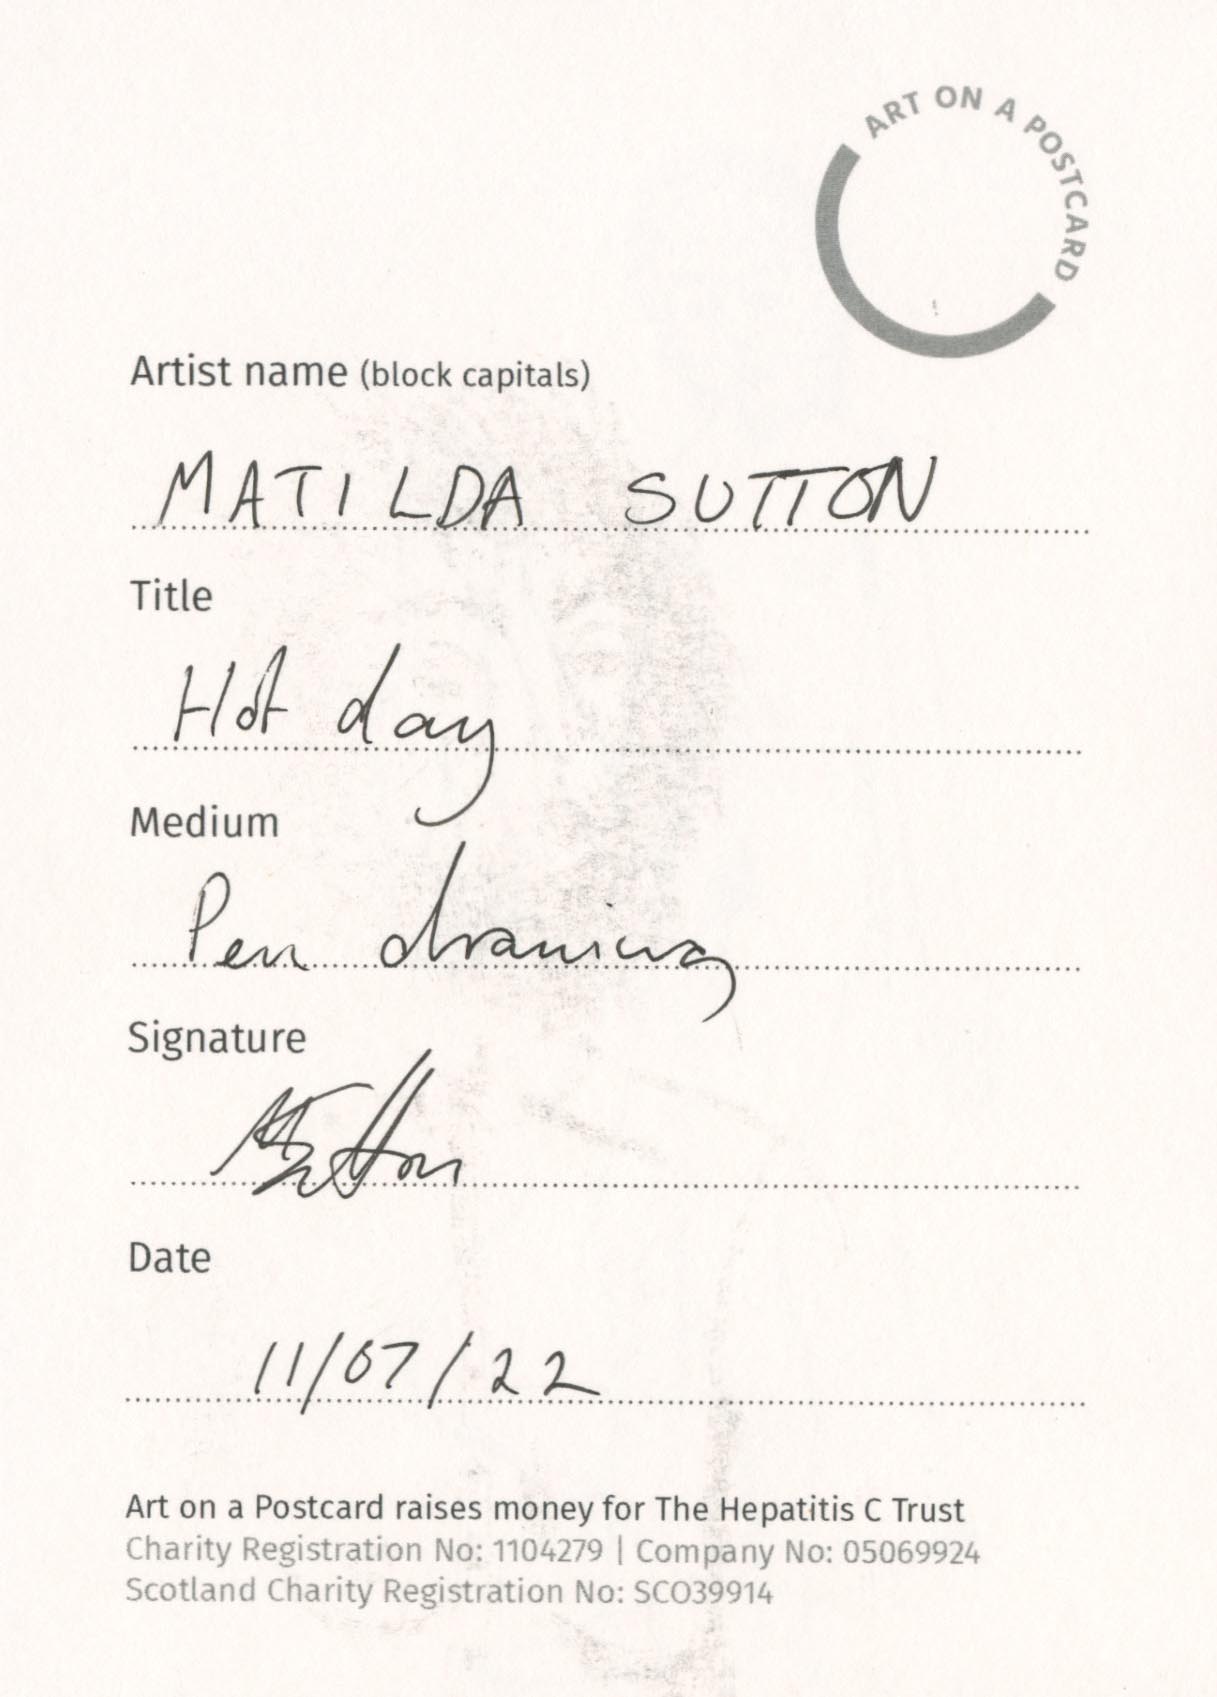 23. Matilda Sutton - Hot Day - BACK